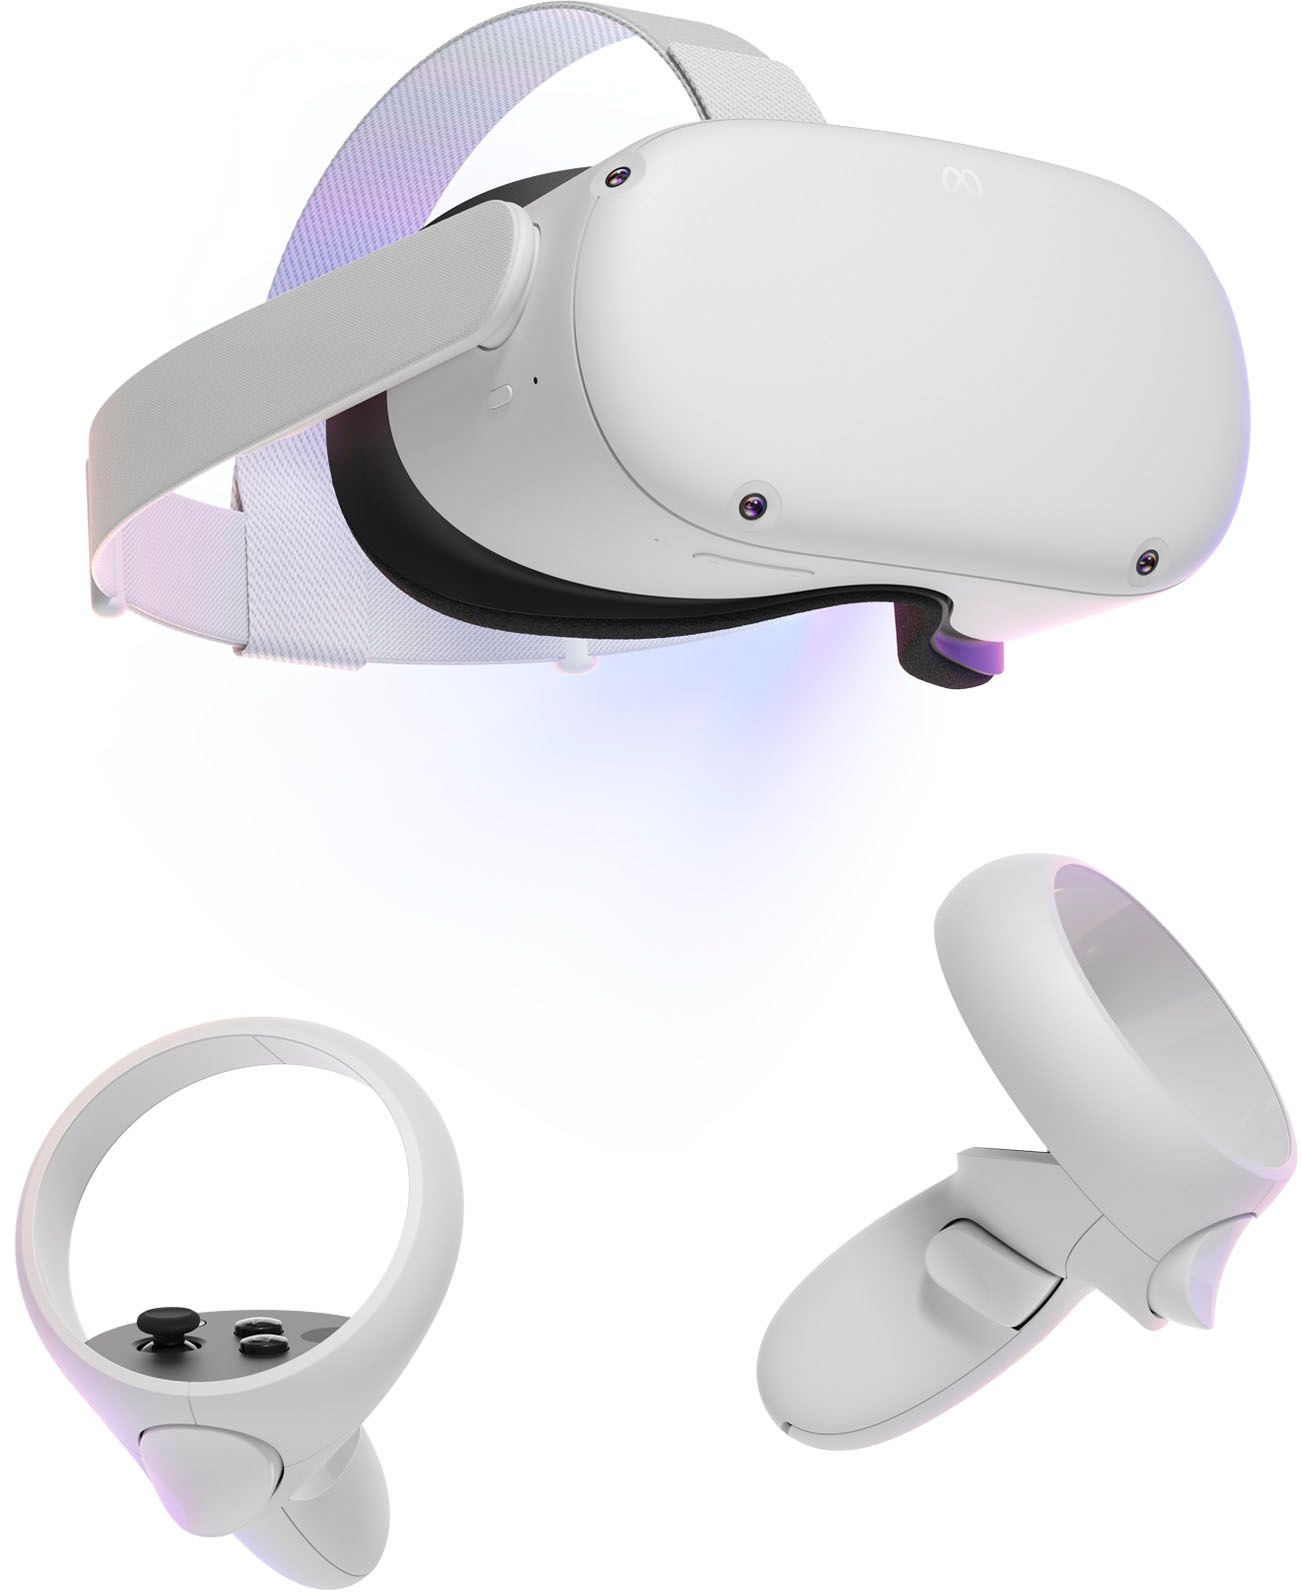 Meta Quest 2 Advanced All-In-One Virtual Reality Headset 128GB 899-00182-02 - Best Buy | Best Buy U.S.